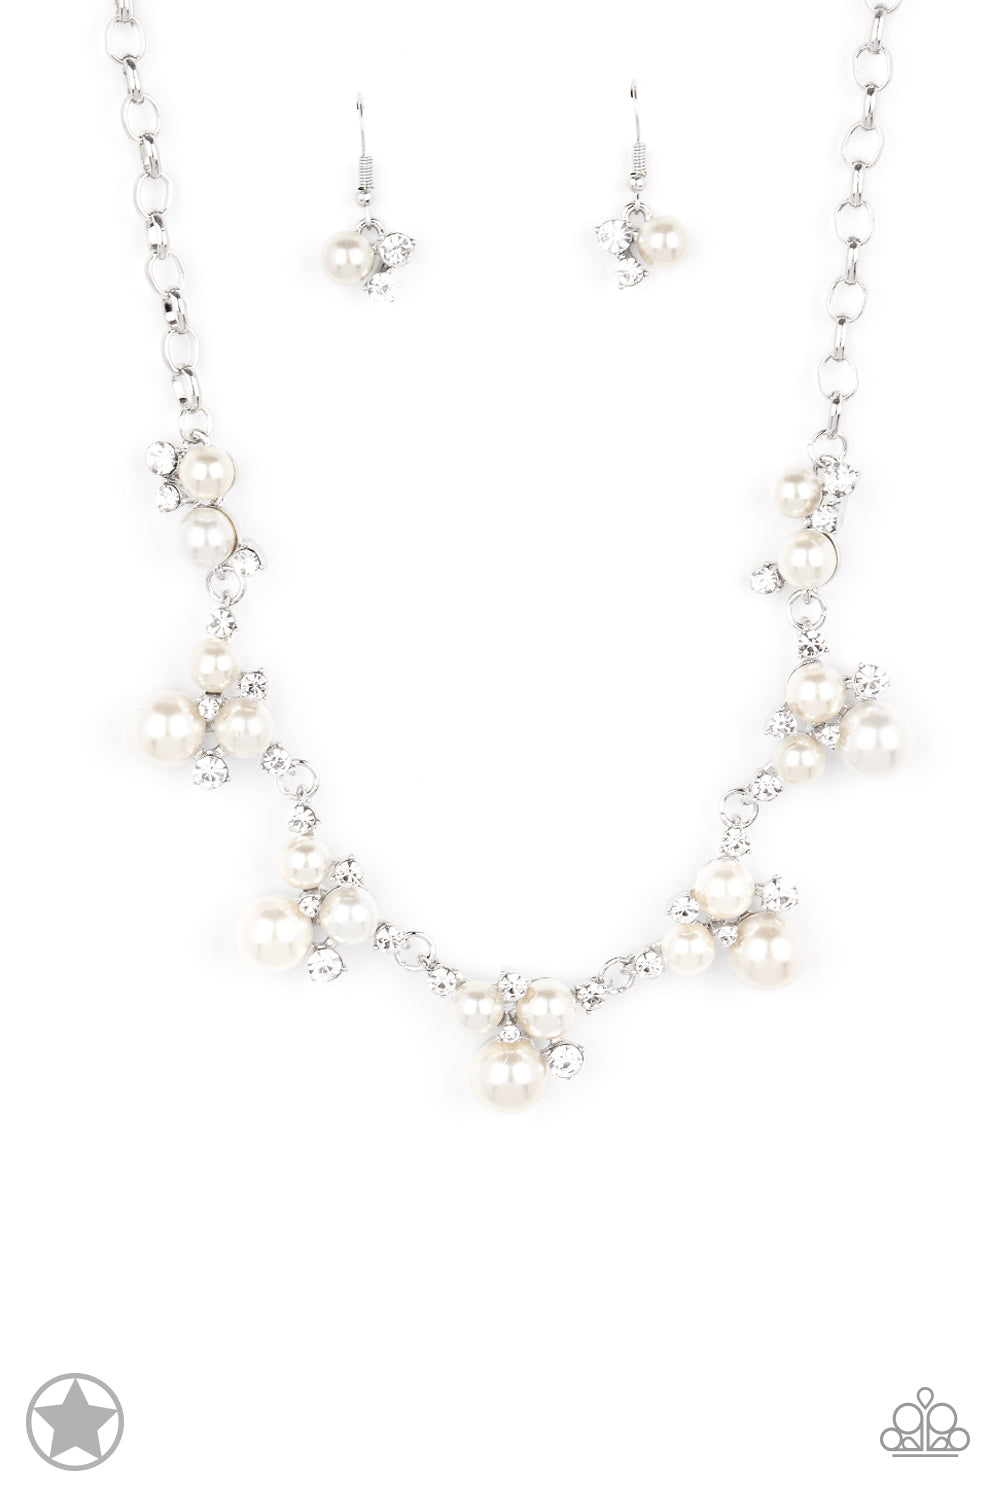 Toast To Perfection - White (Pearls/Rhinestones) Necklace freeshipping - JewLz4u Gemstone Gallery